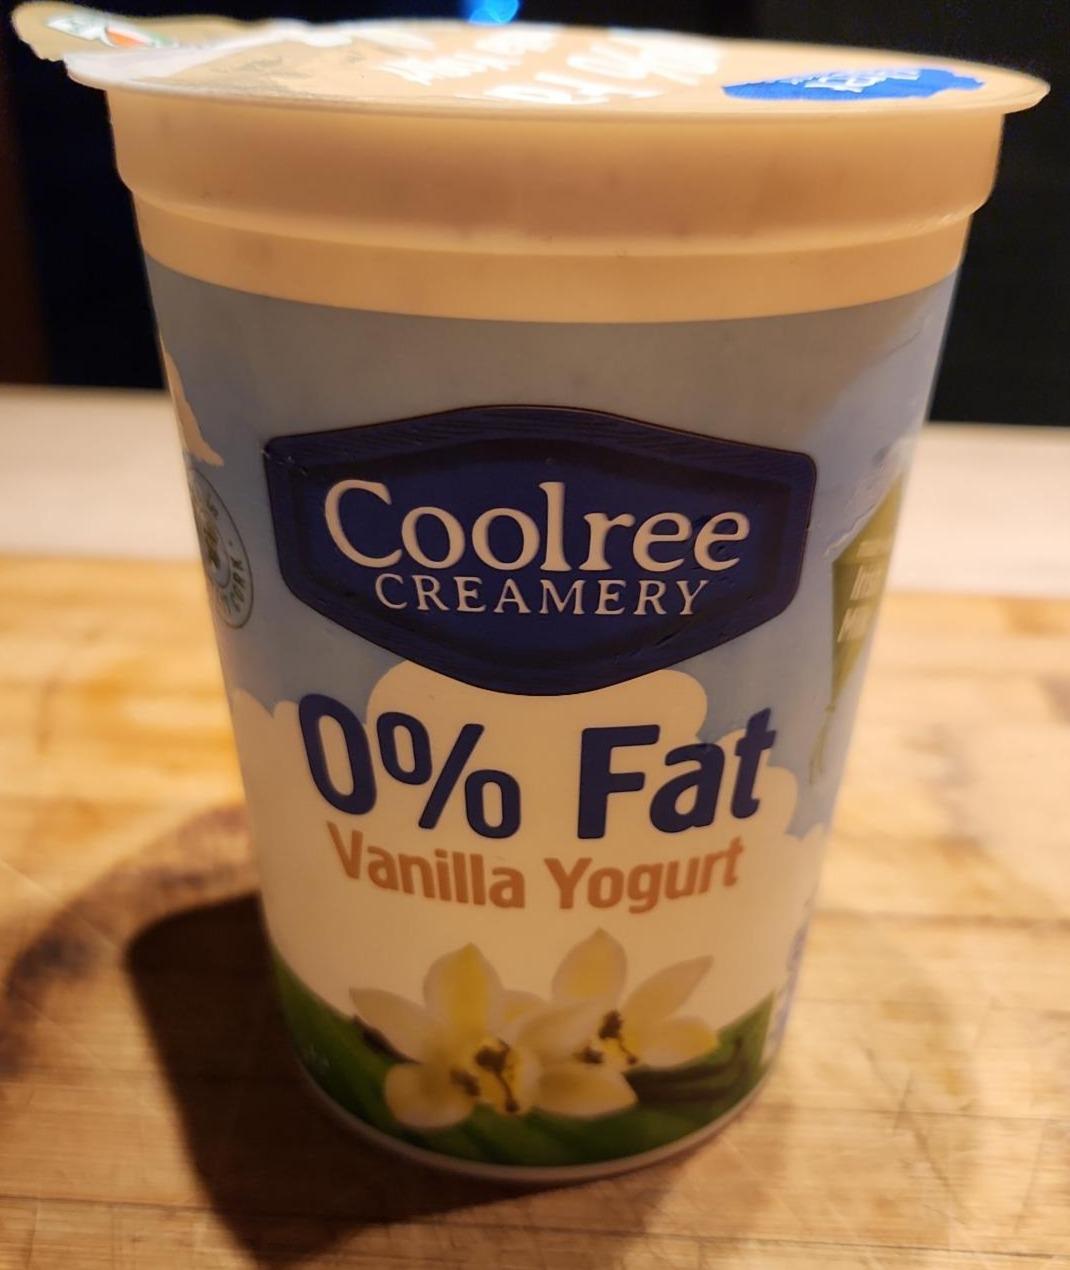 Fotografie - 0% Fat Vanilla Yogurt Coolree Creamery